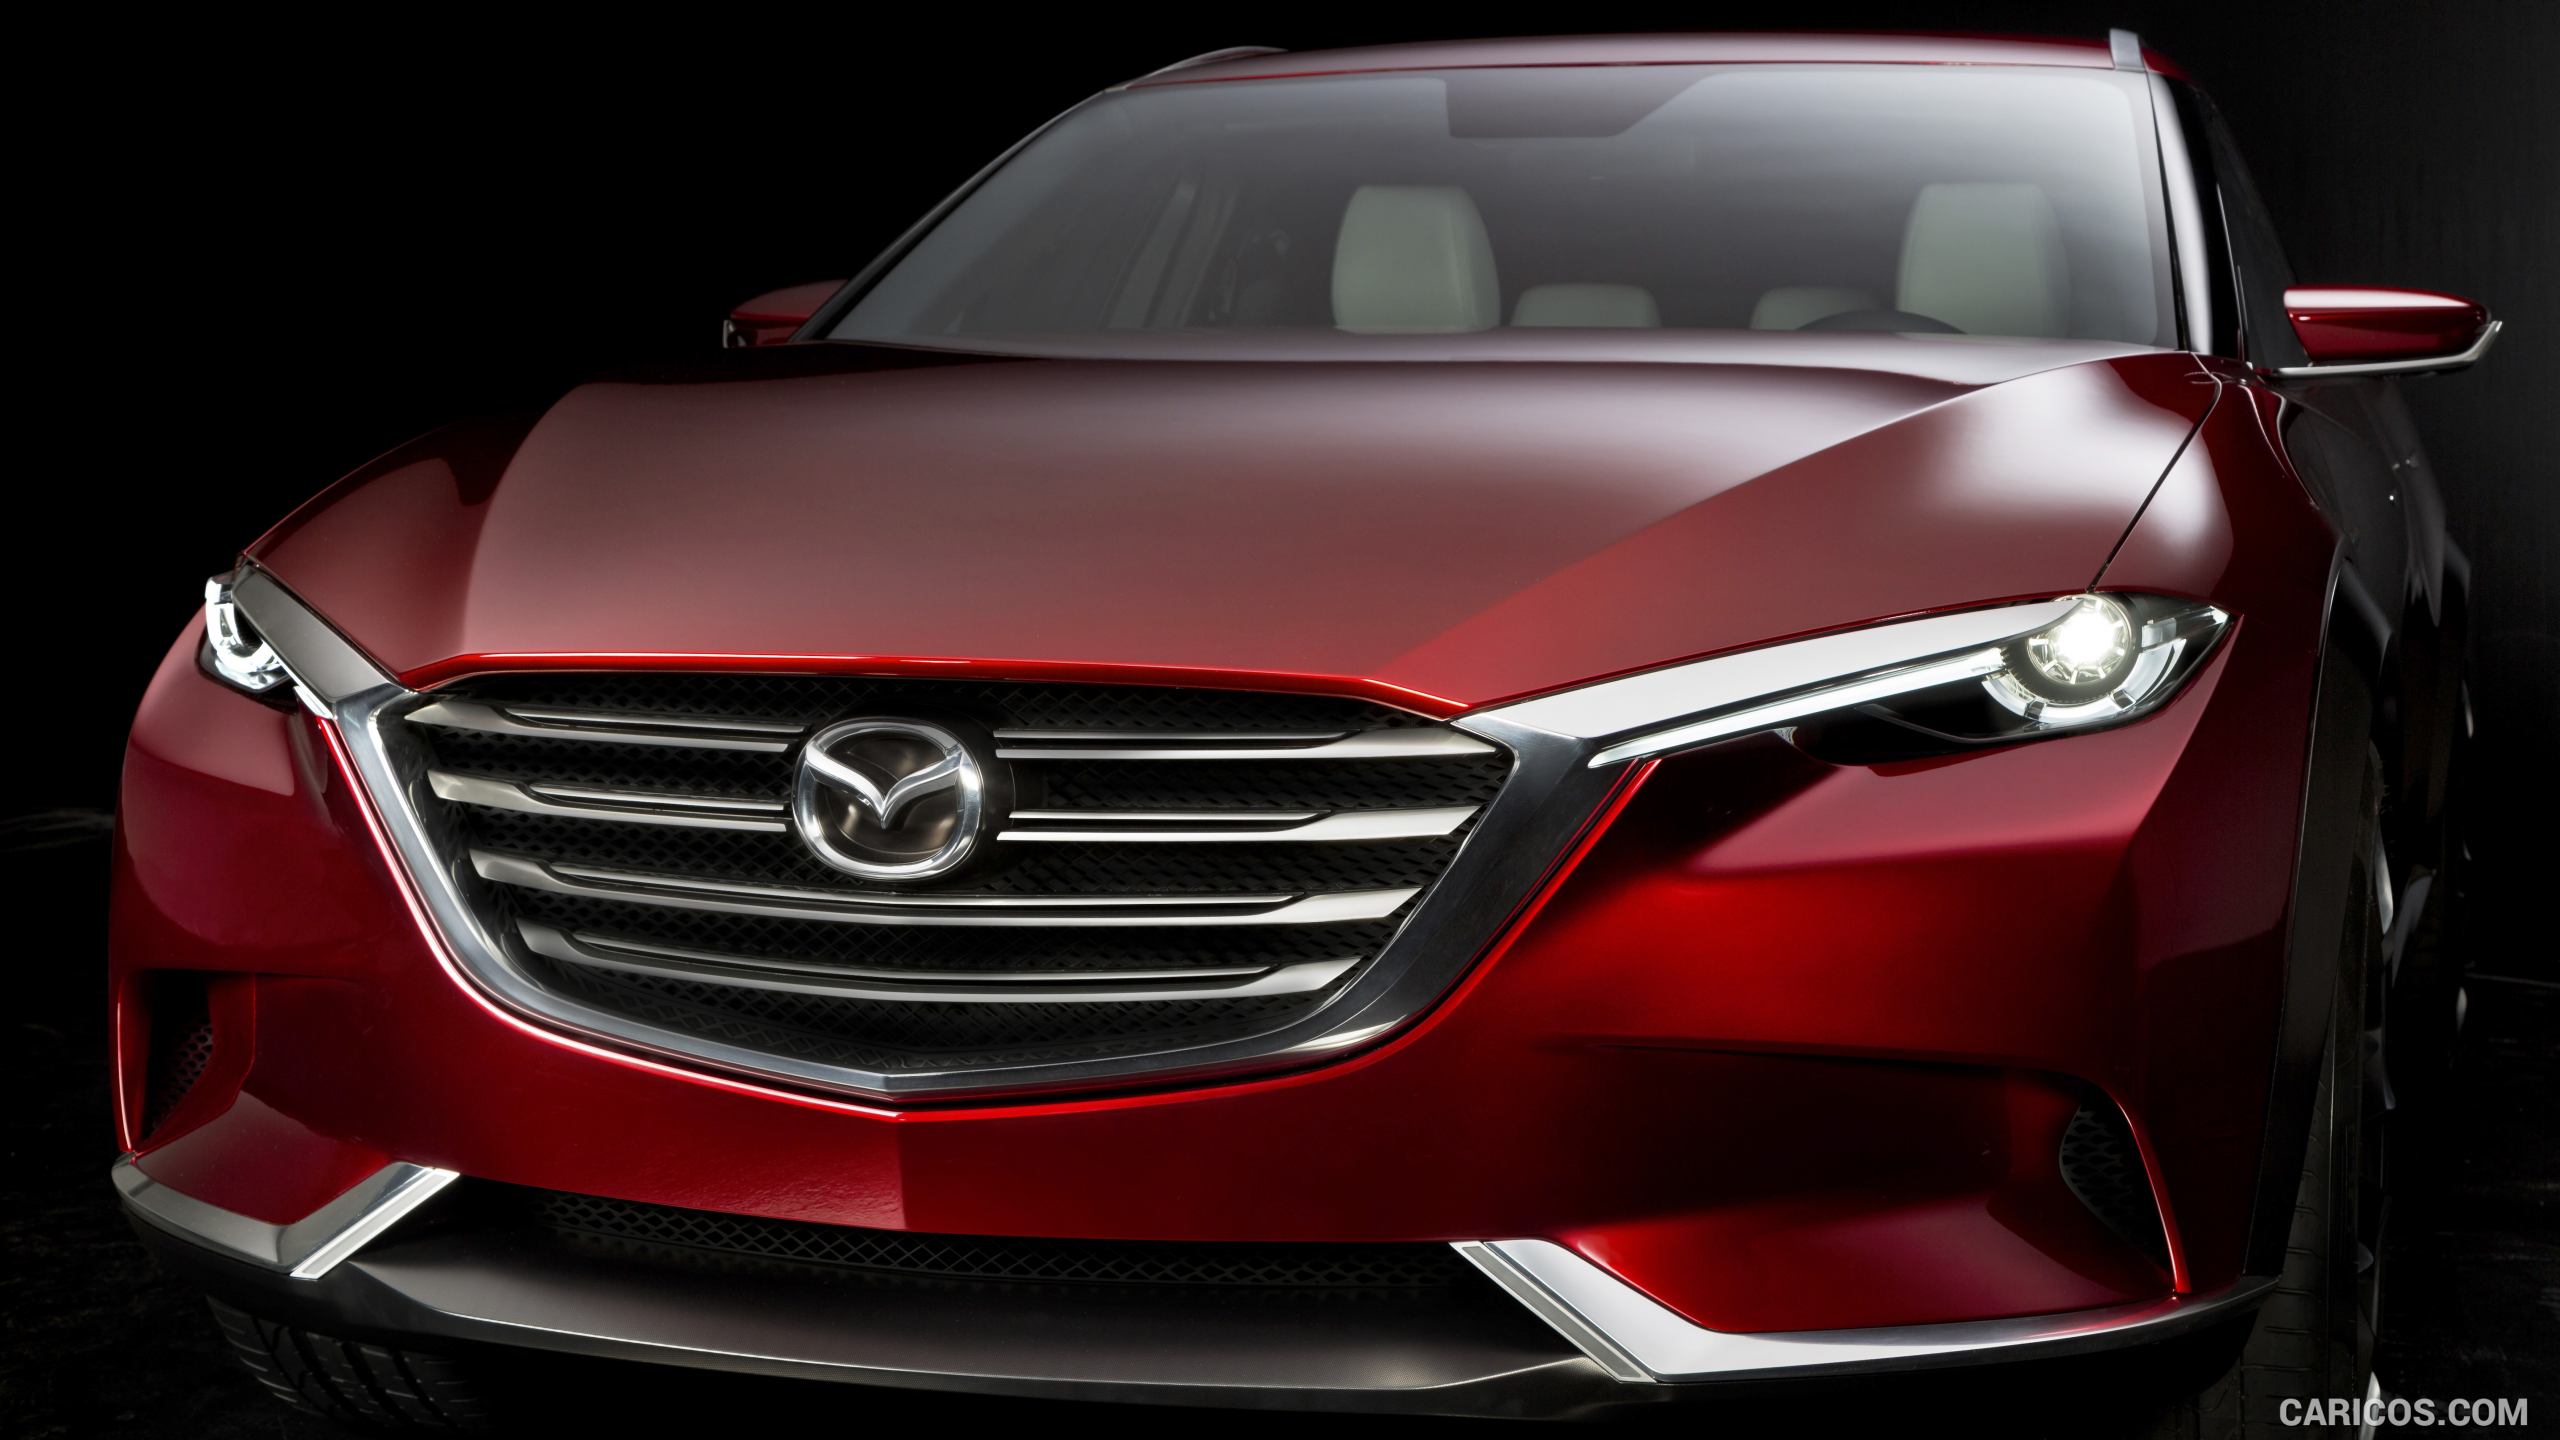 2015 Mazda Koeru Crossover Concept - Front, #6 of 17